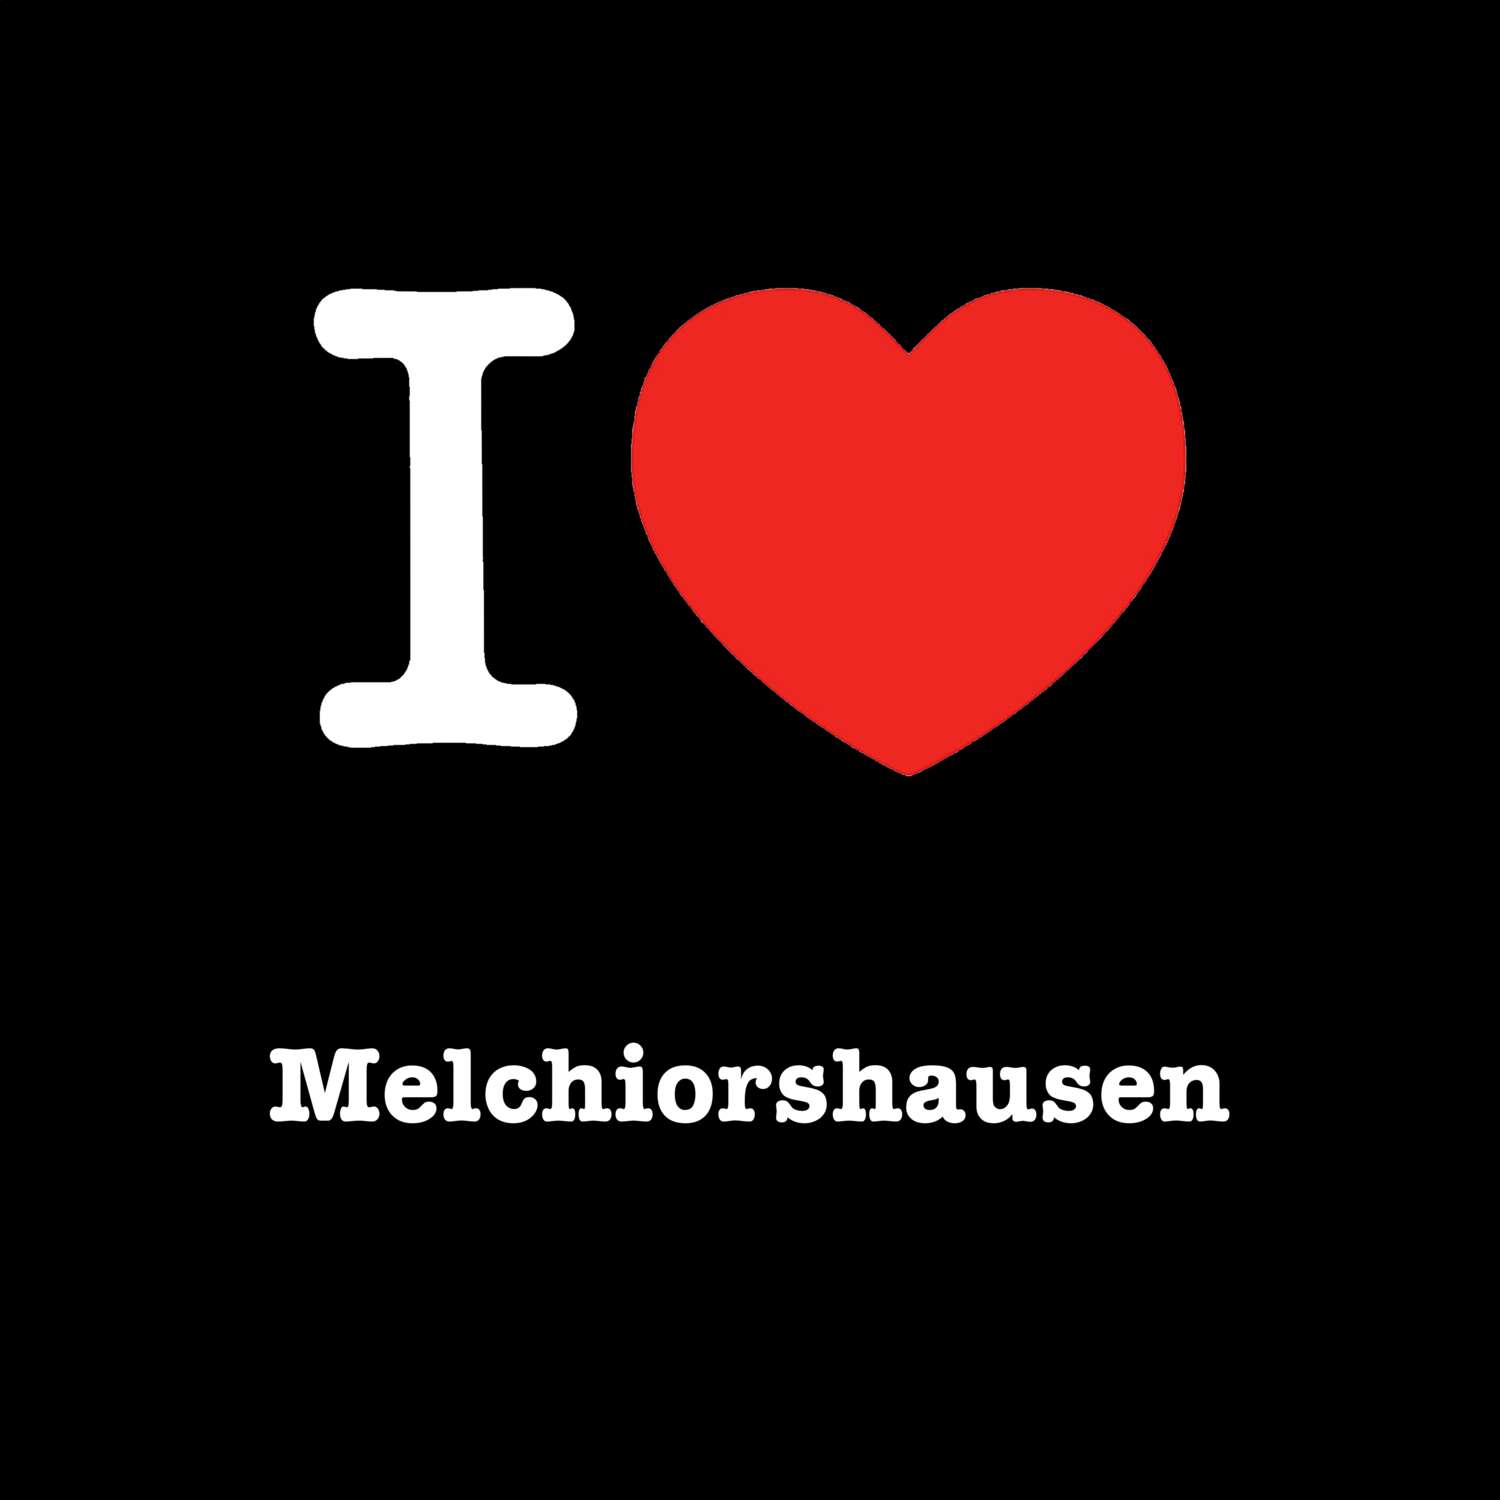 Melchiorshausen T-Shirt »I love«